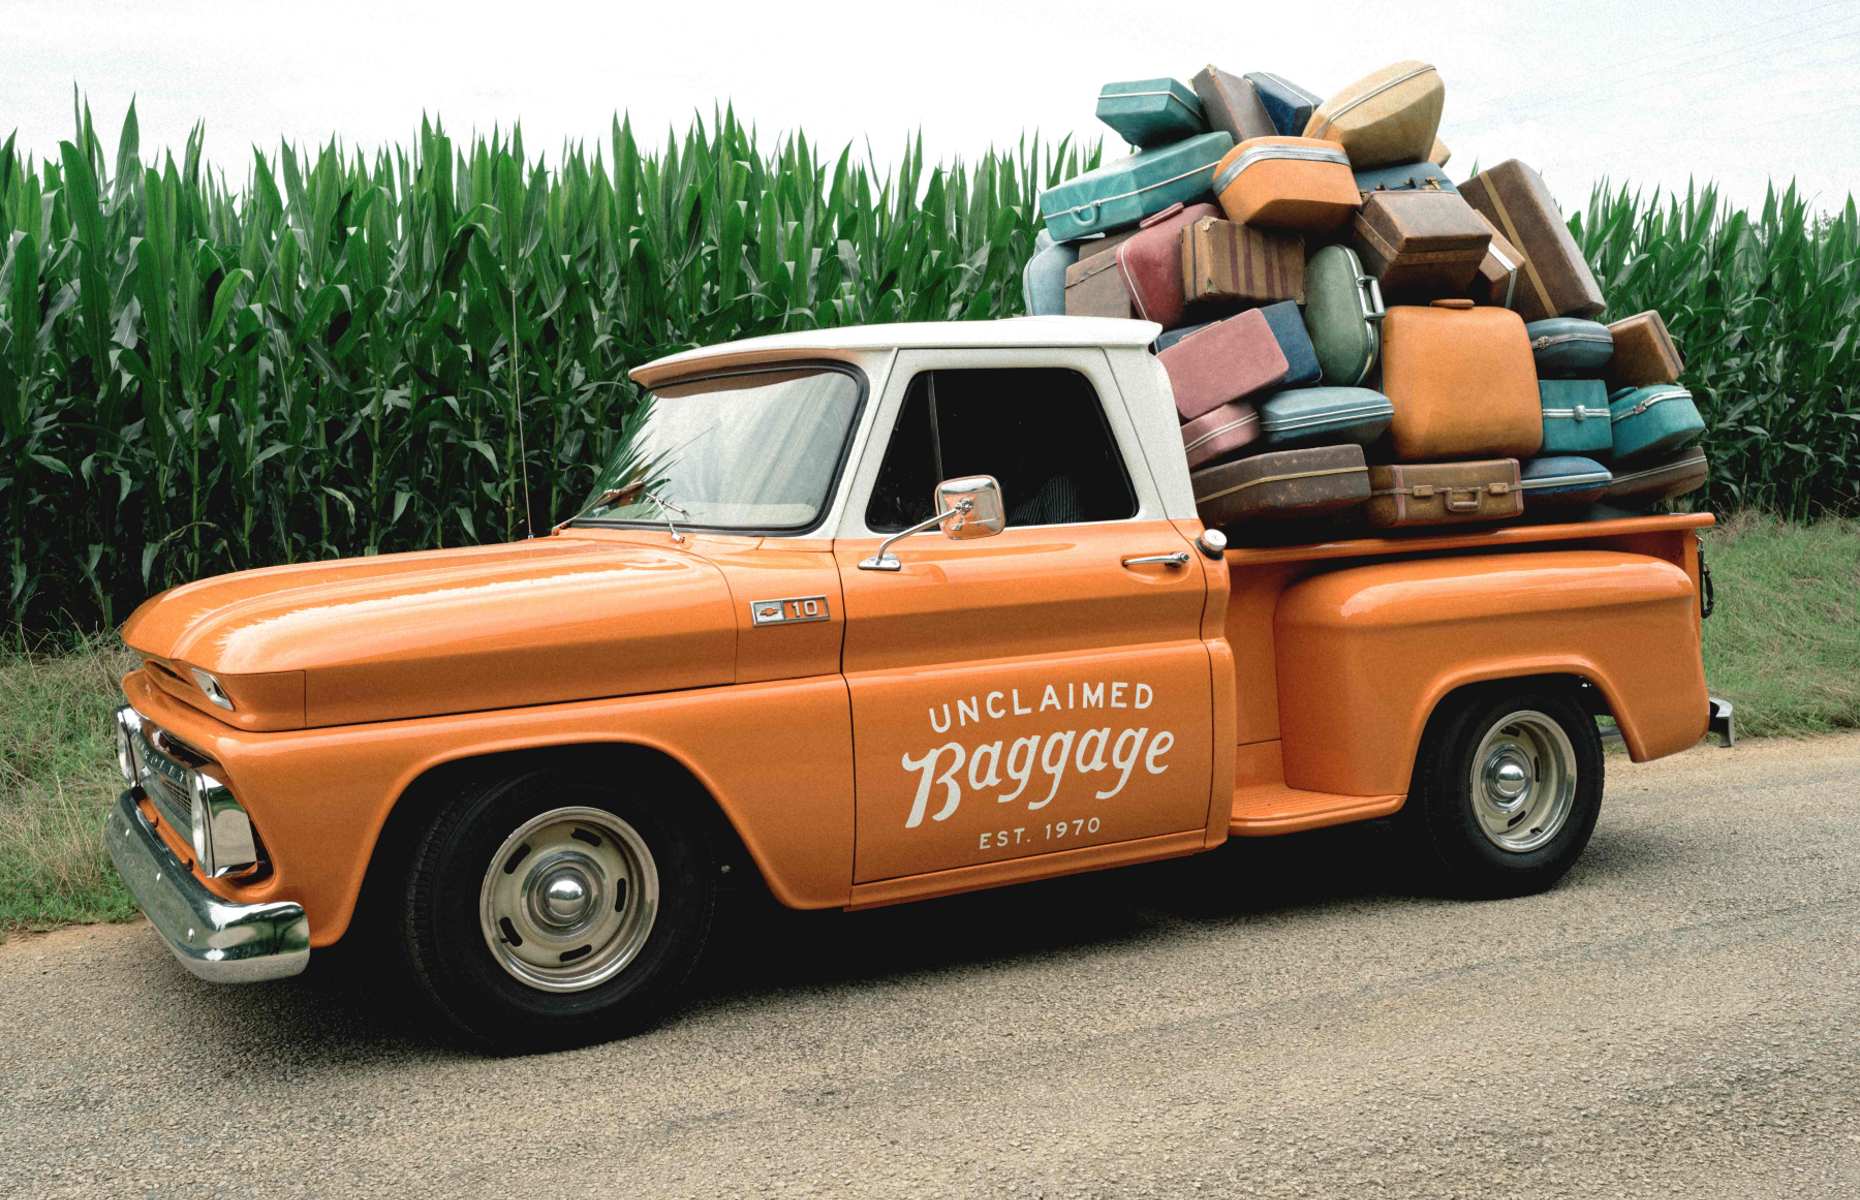 A decorative truck at Unclaimed Baggage, Scottsboro (Image: Tourism Alabama)